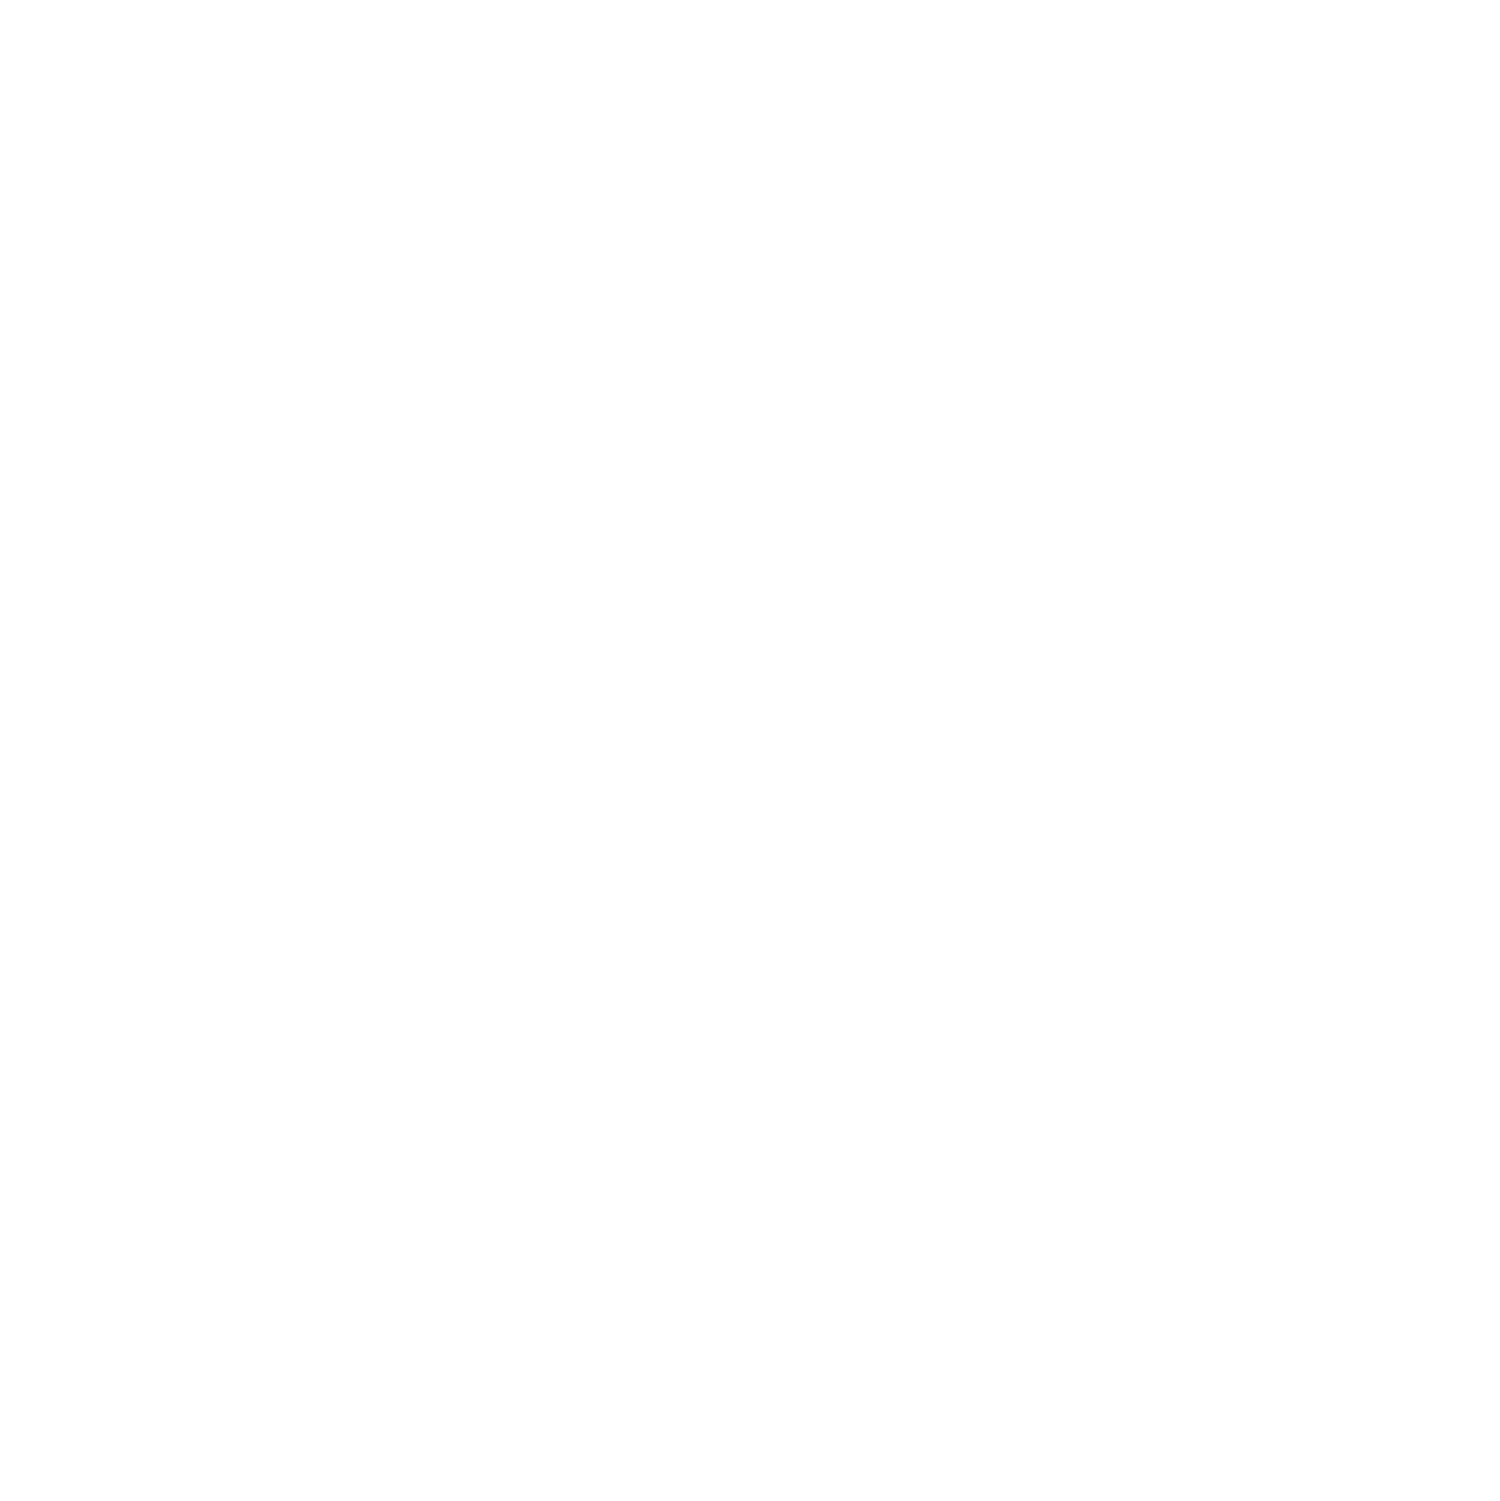 Read 4 Unity